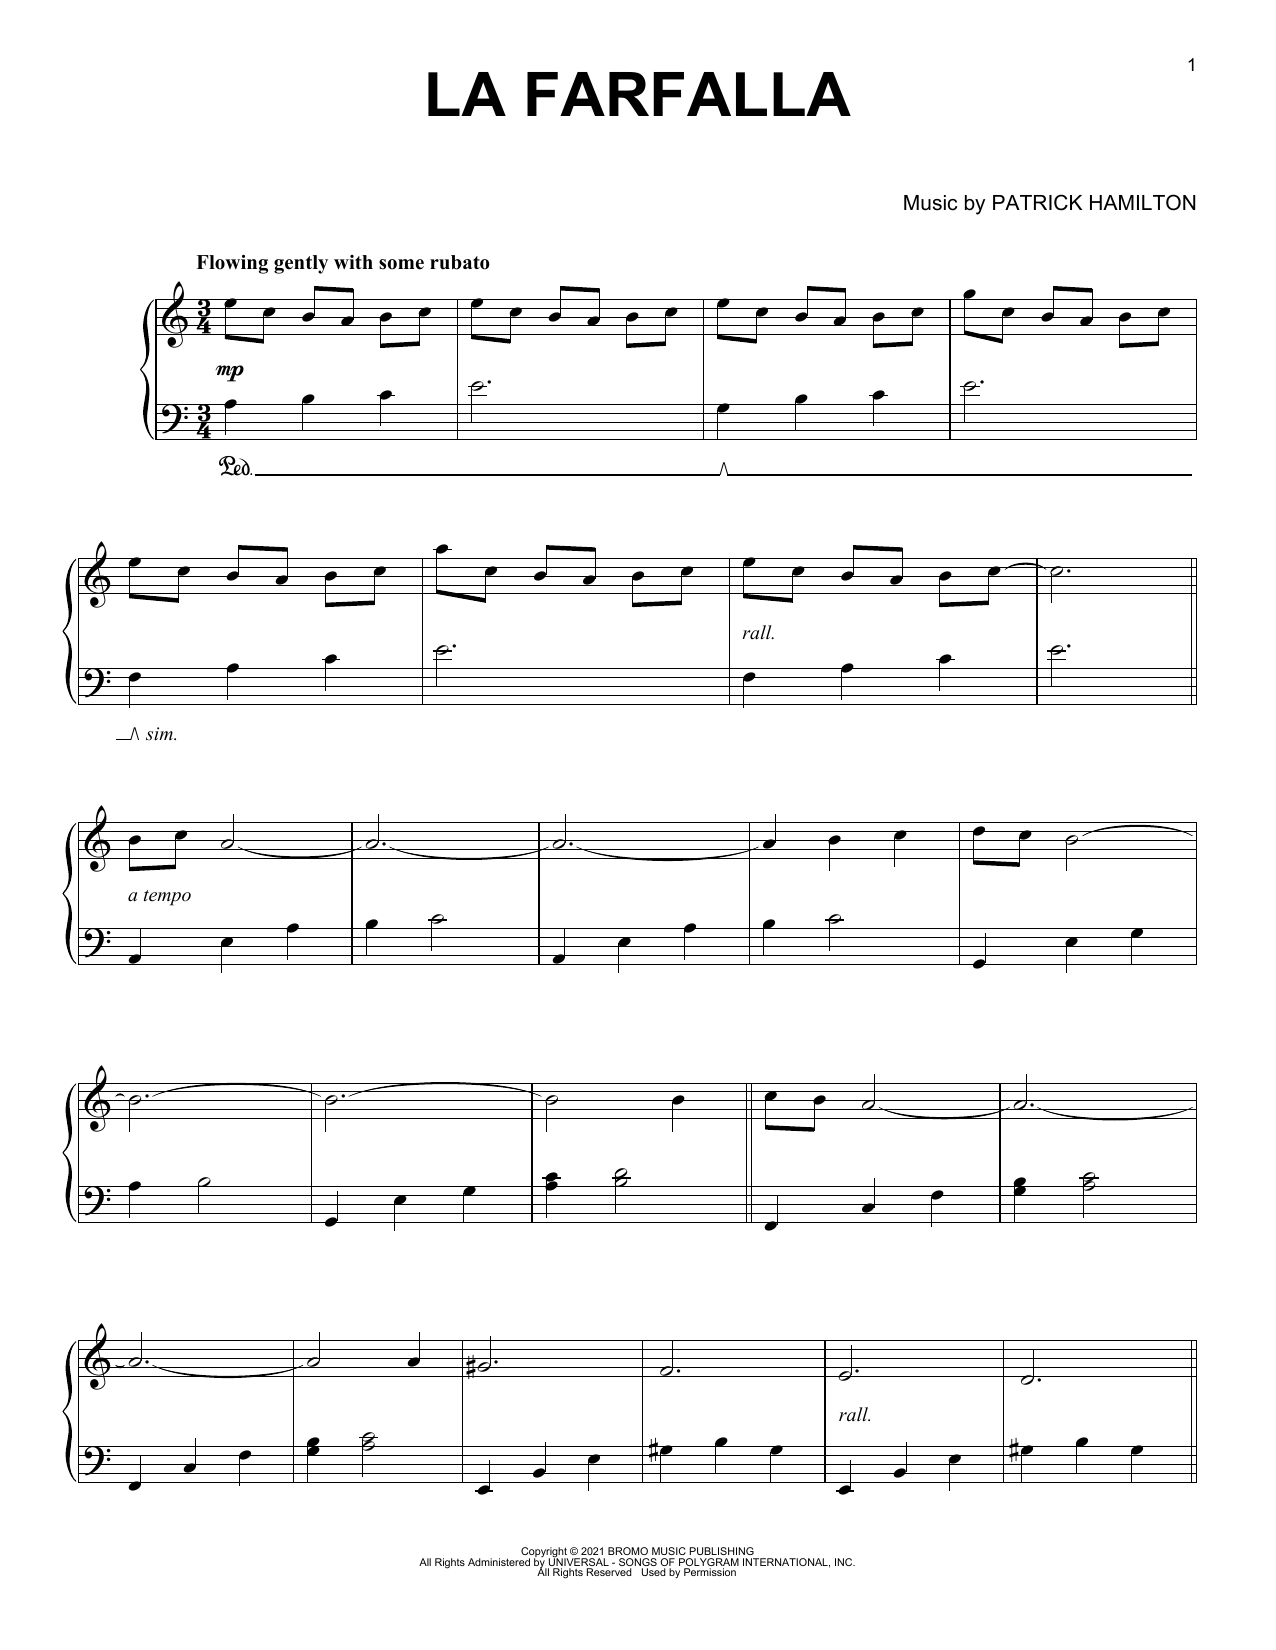 Download Patrick Hamilton La Farfalla Sheet Music and learn how to play Piano Solo PDF digital score in minutes